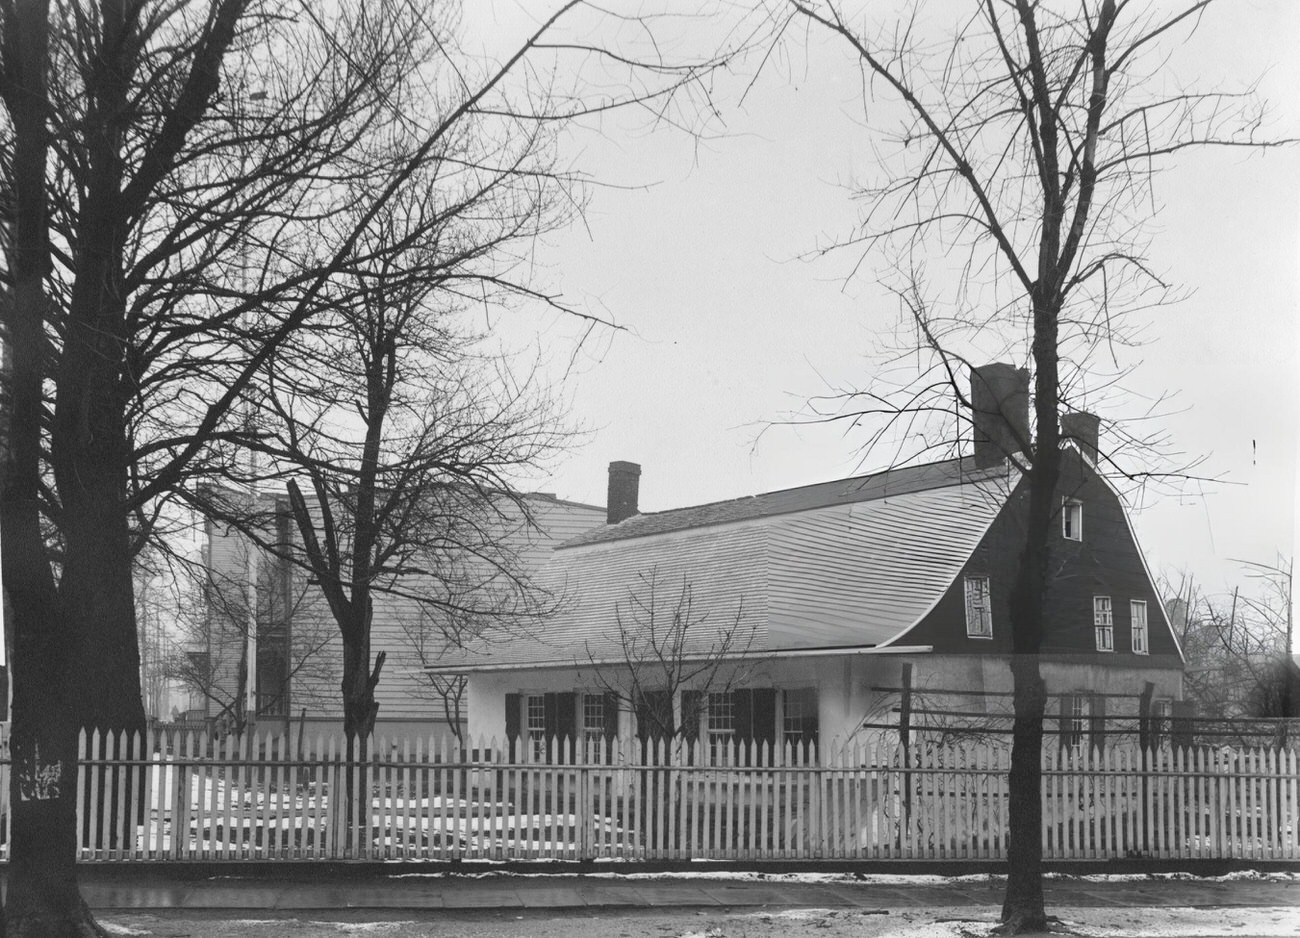 Dutch Farmhouse From The 17Th Or 18Th Century On Evergreen Avenue, Bronx, 1895.